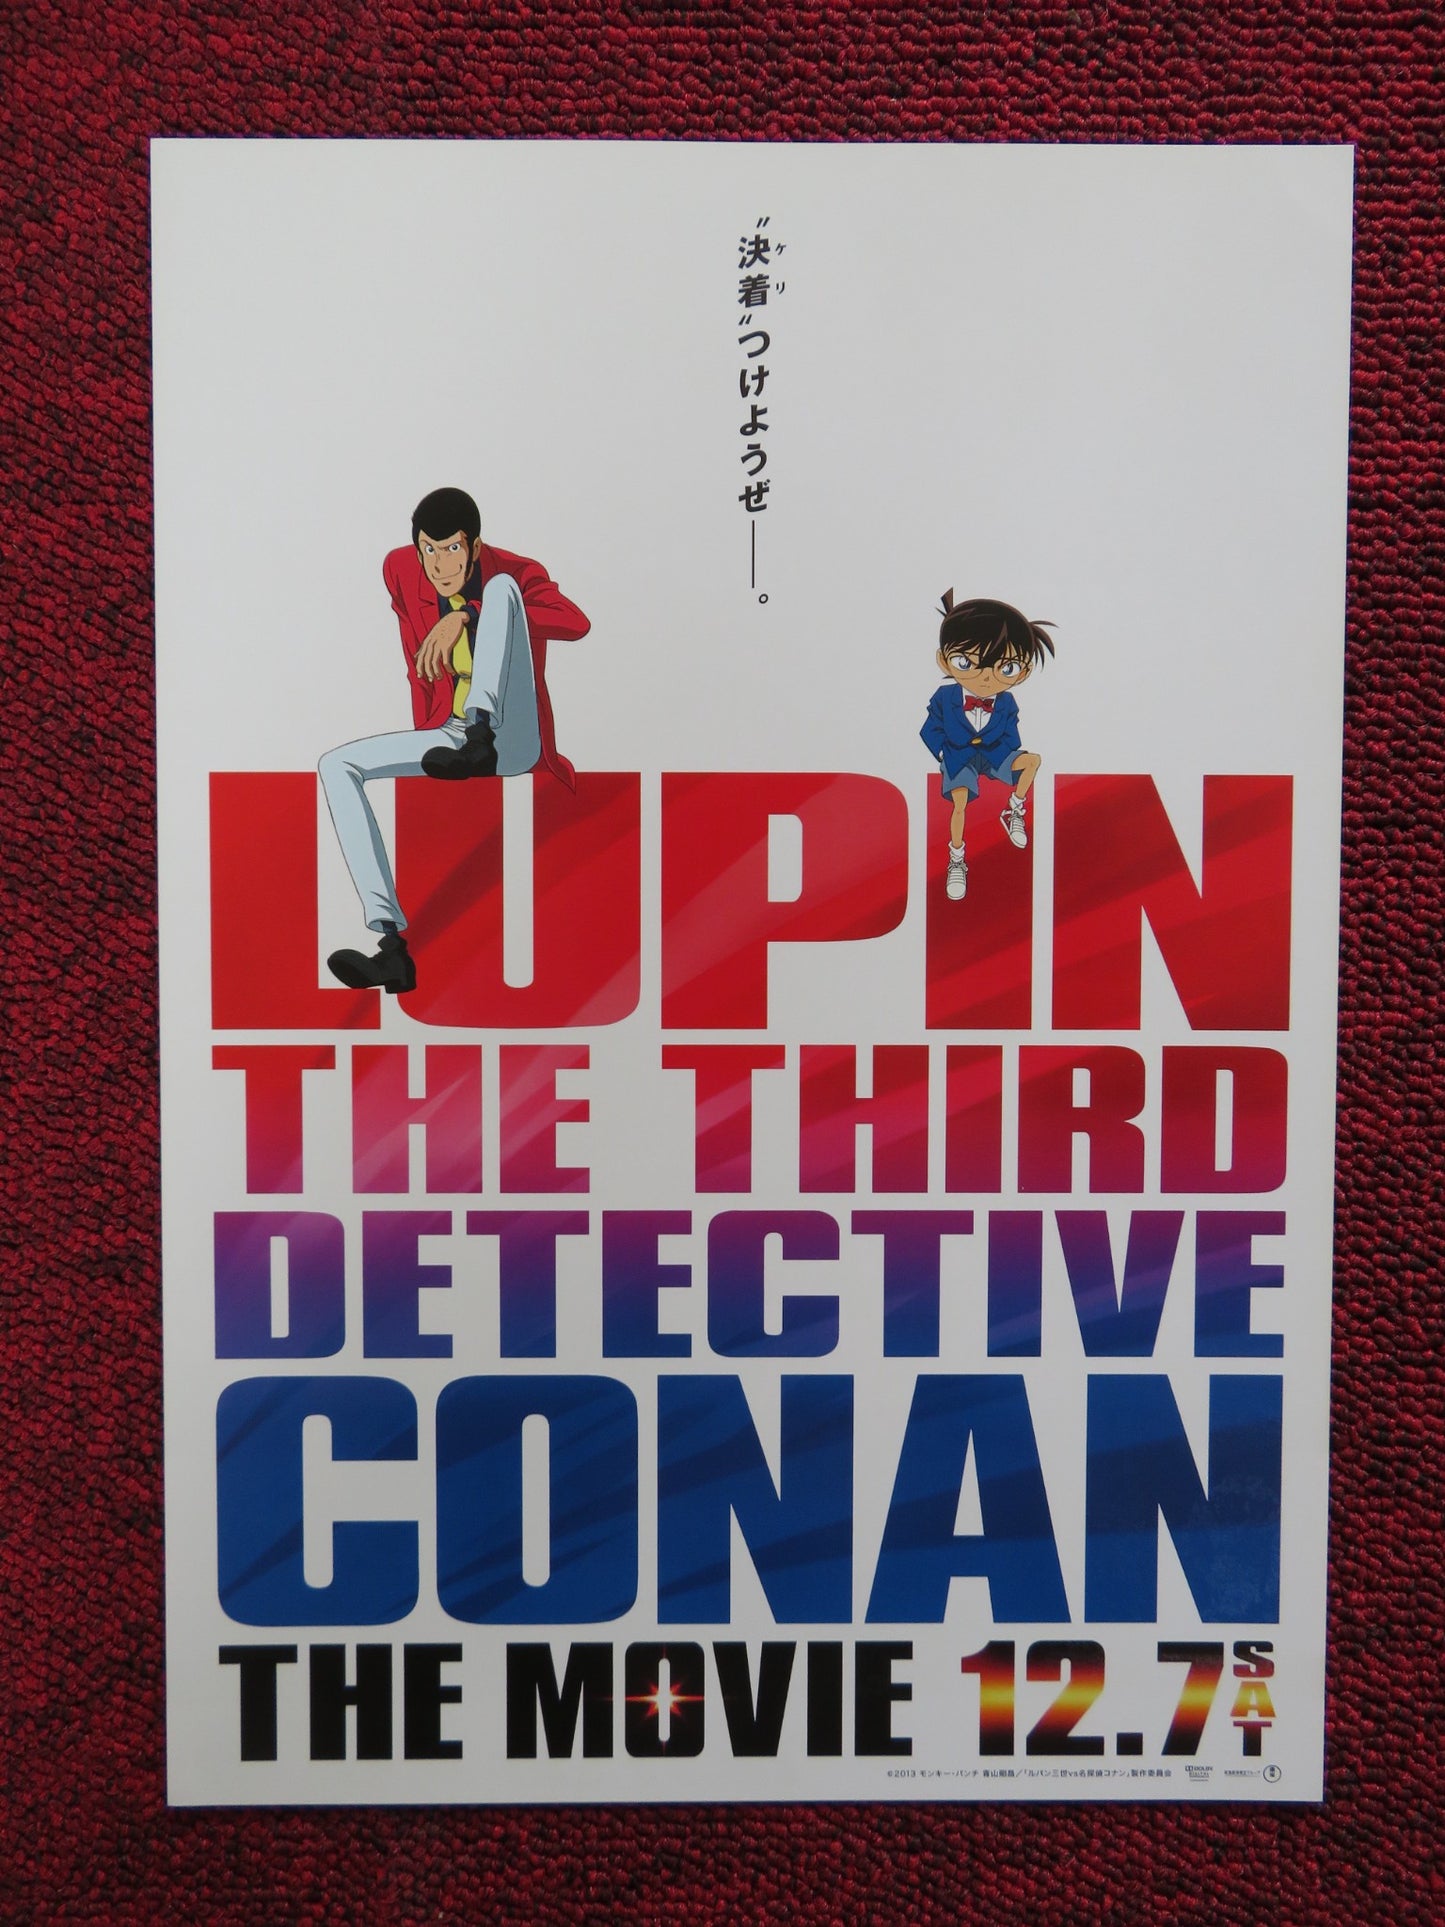 LUPIN III VS. DETECTIVE CONAN: THE MOVIE JAPANESE CHIRASHI (B5) POSTER 2013